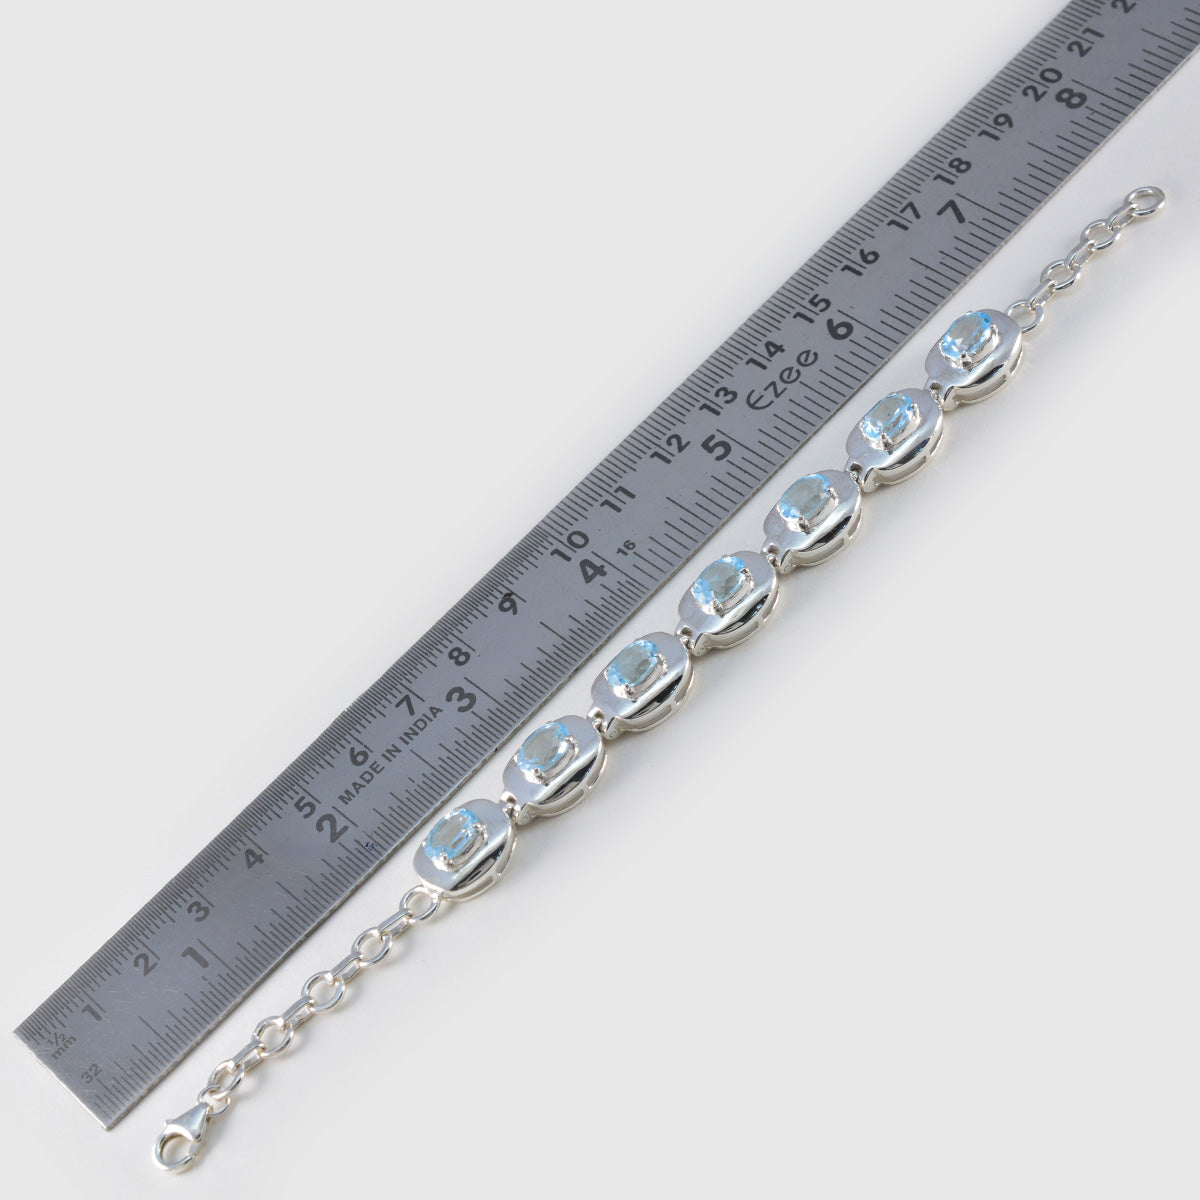 Riyo Supplies 925 Sterling Silver Bracelet For Womens Blue Topaz Bracelet Prong Setting Bracelet with Fish Hook Link Bracelet L Size 6-8.5 Inch.